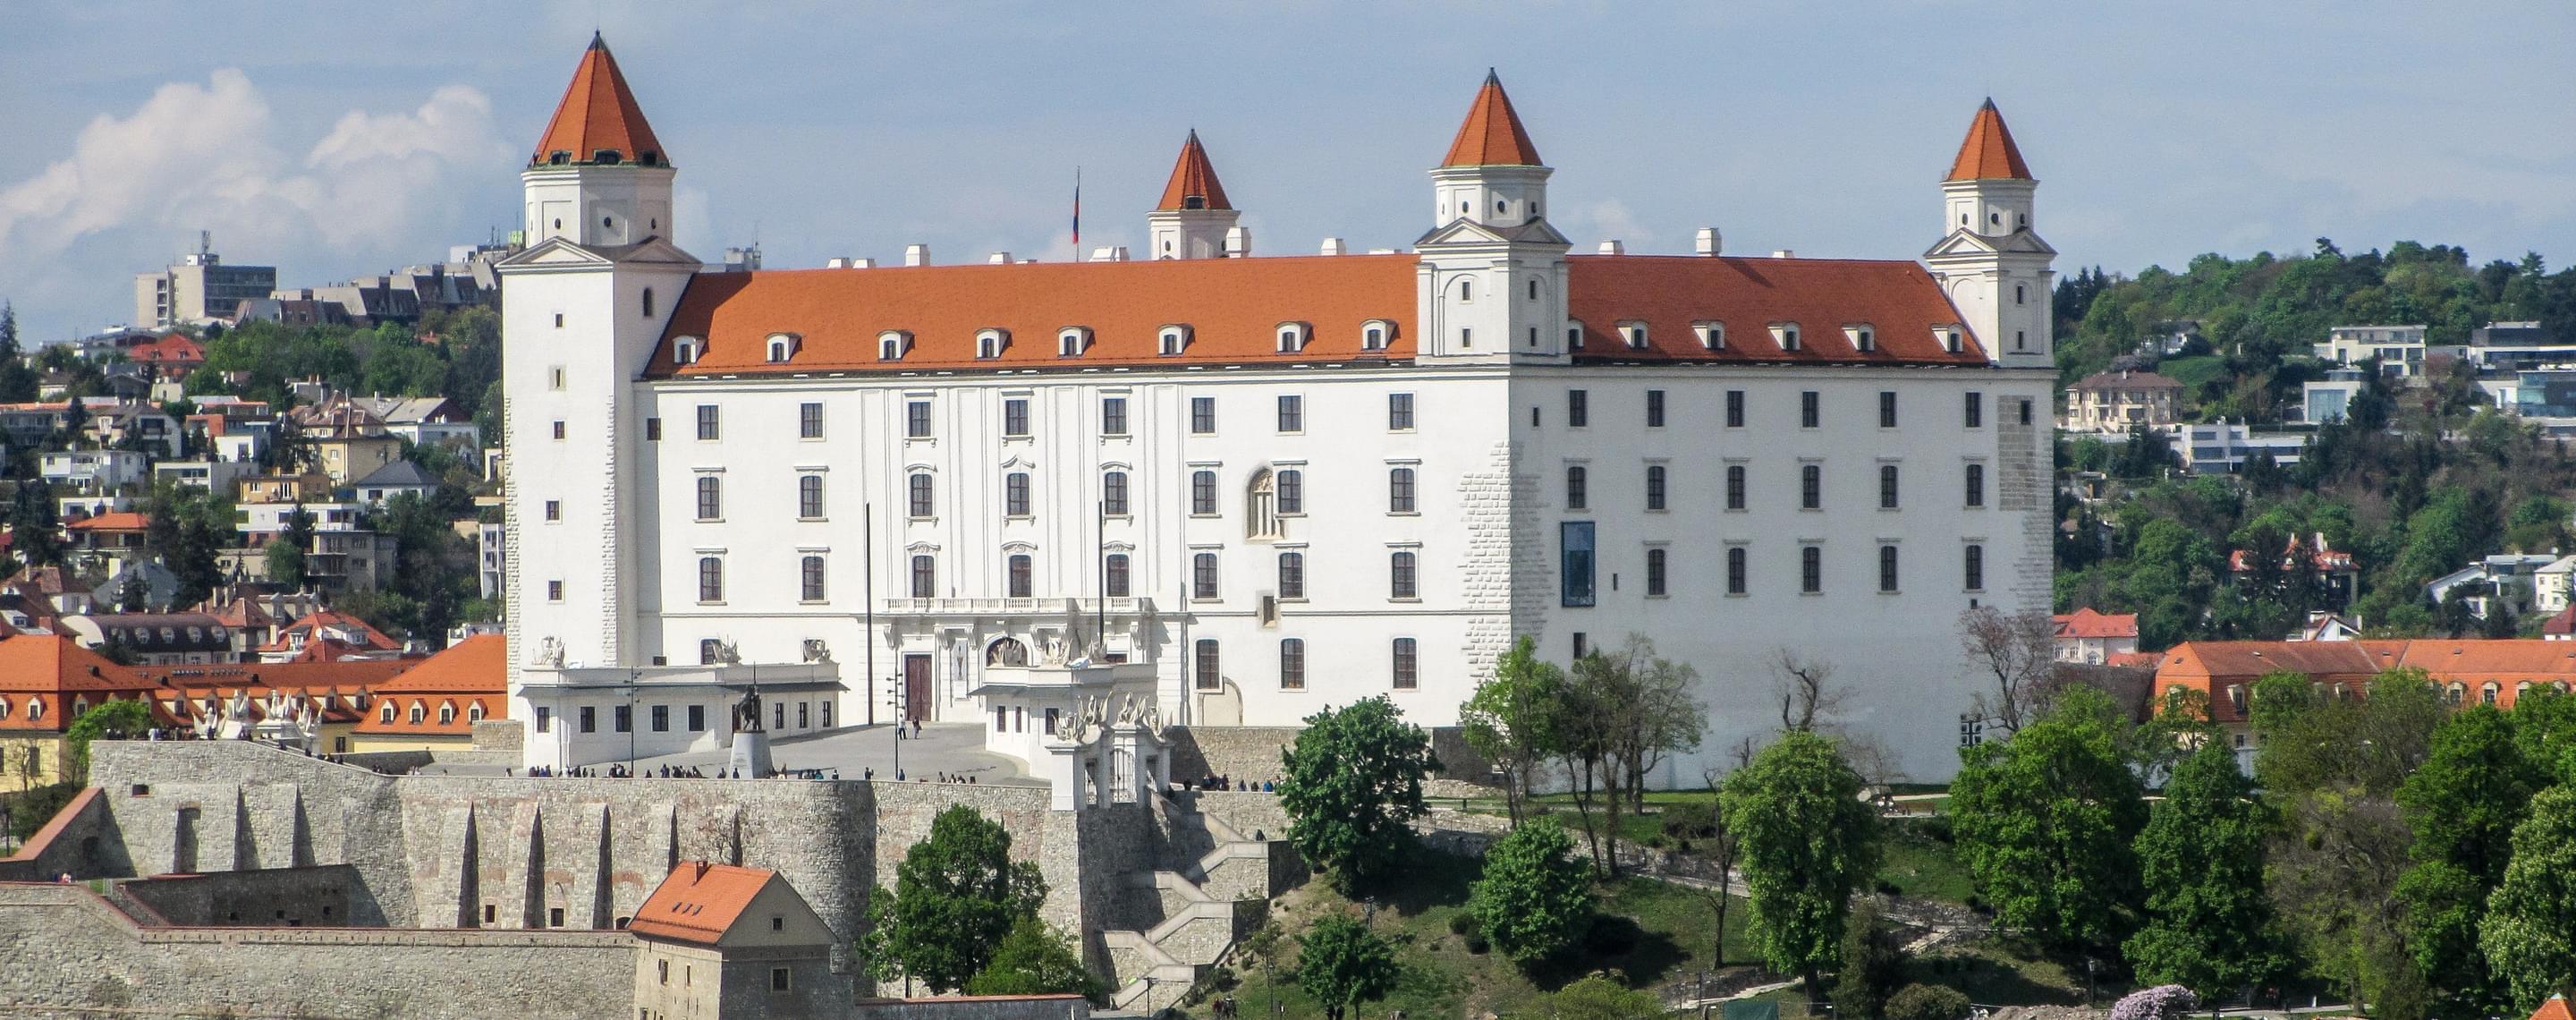 Bratislava Castle Overview